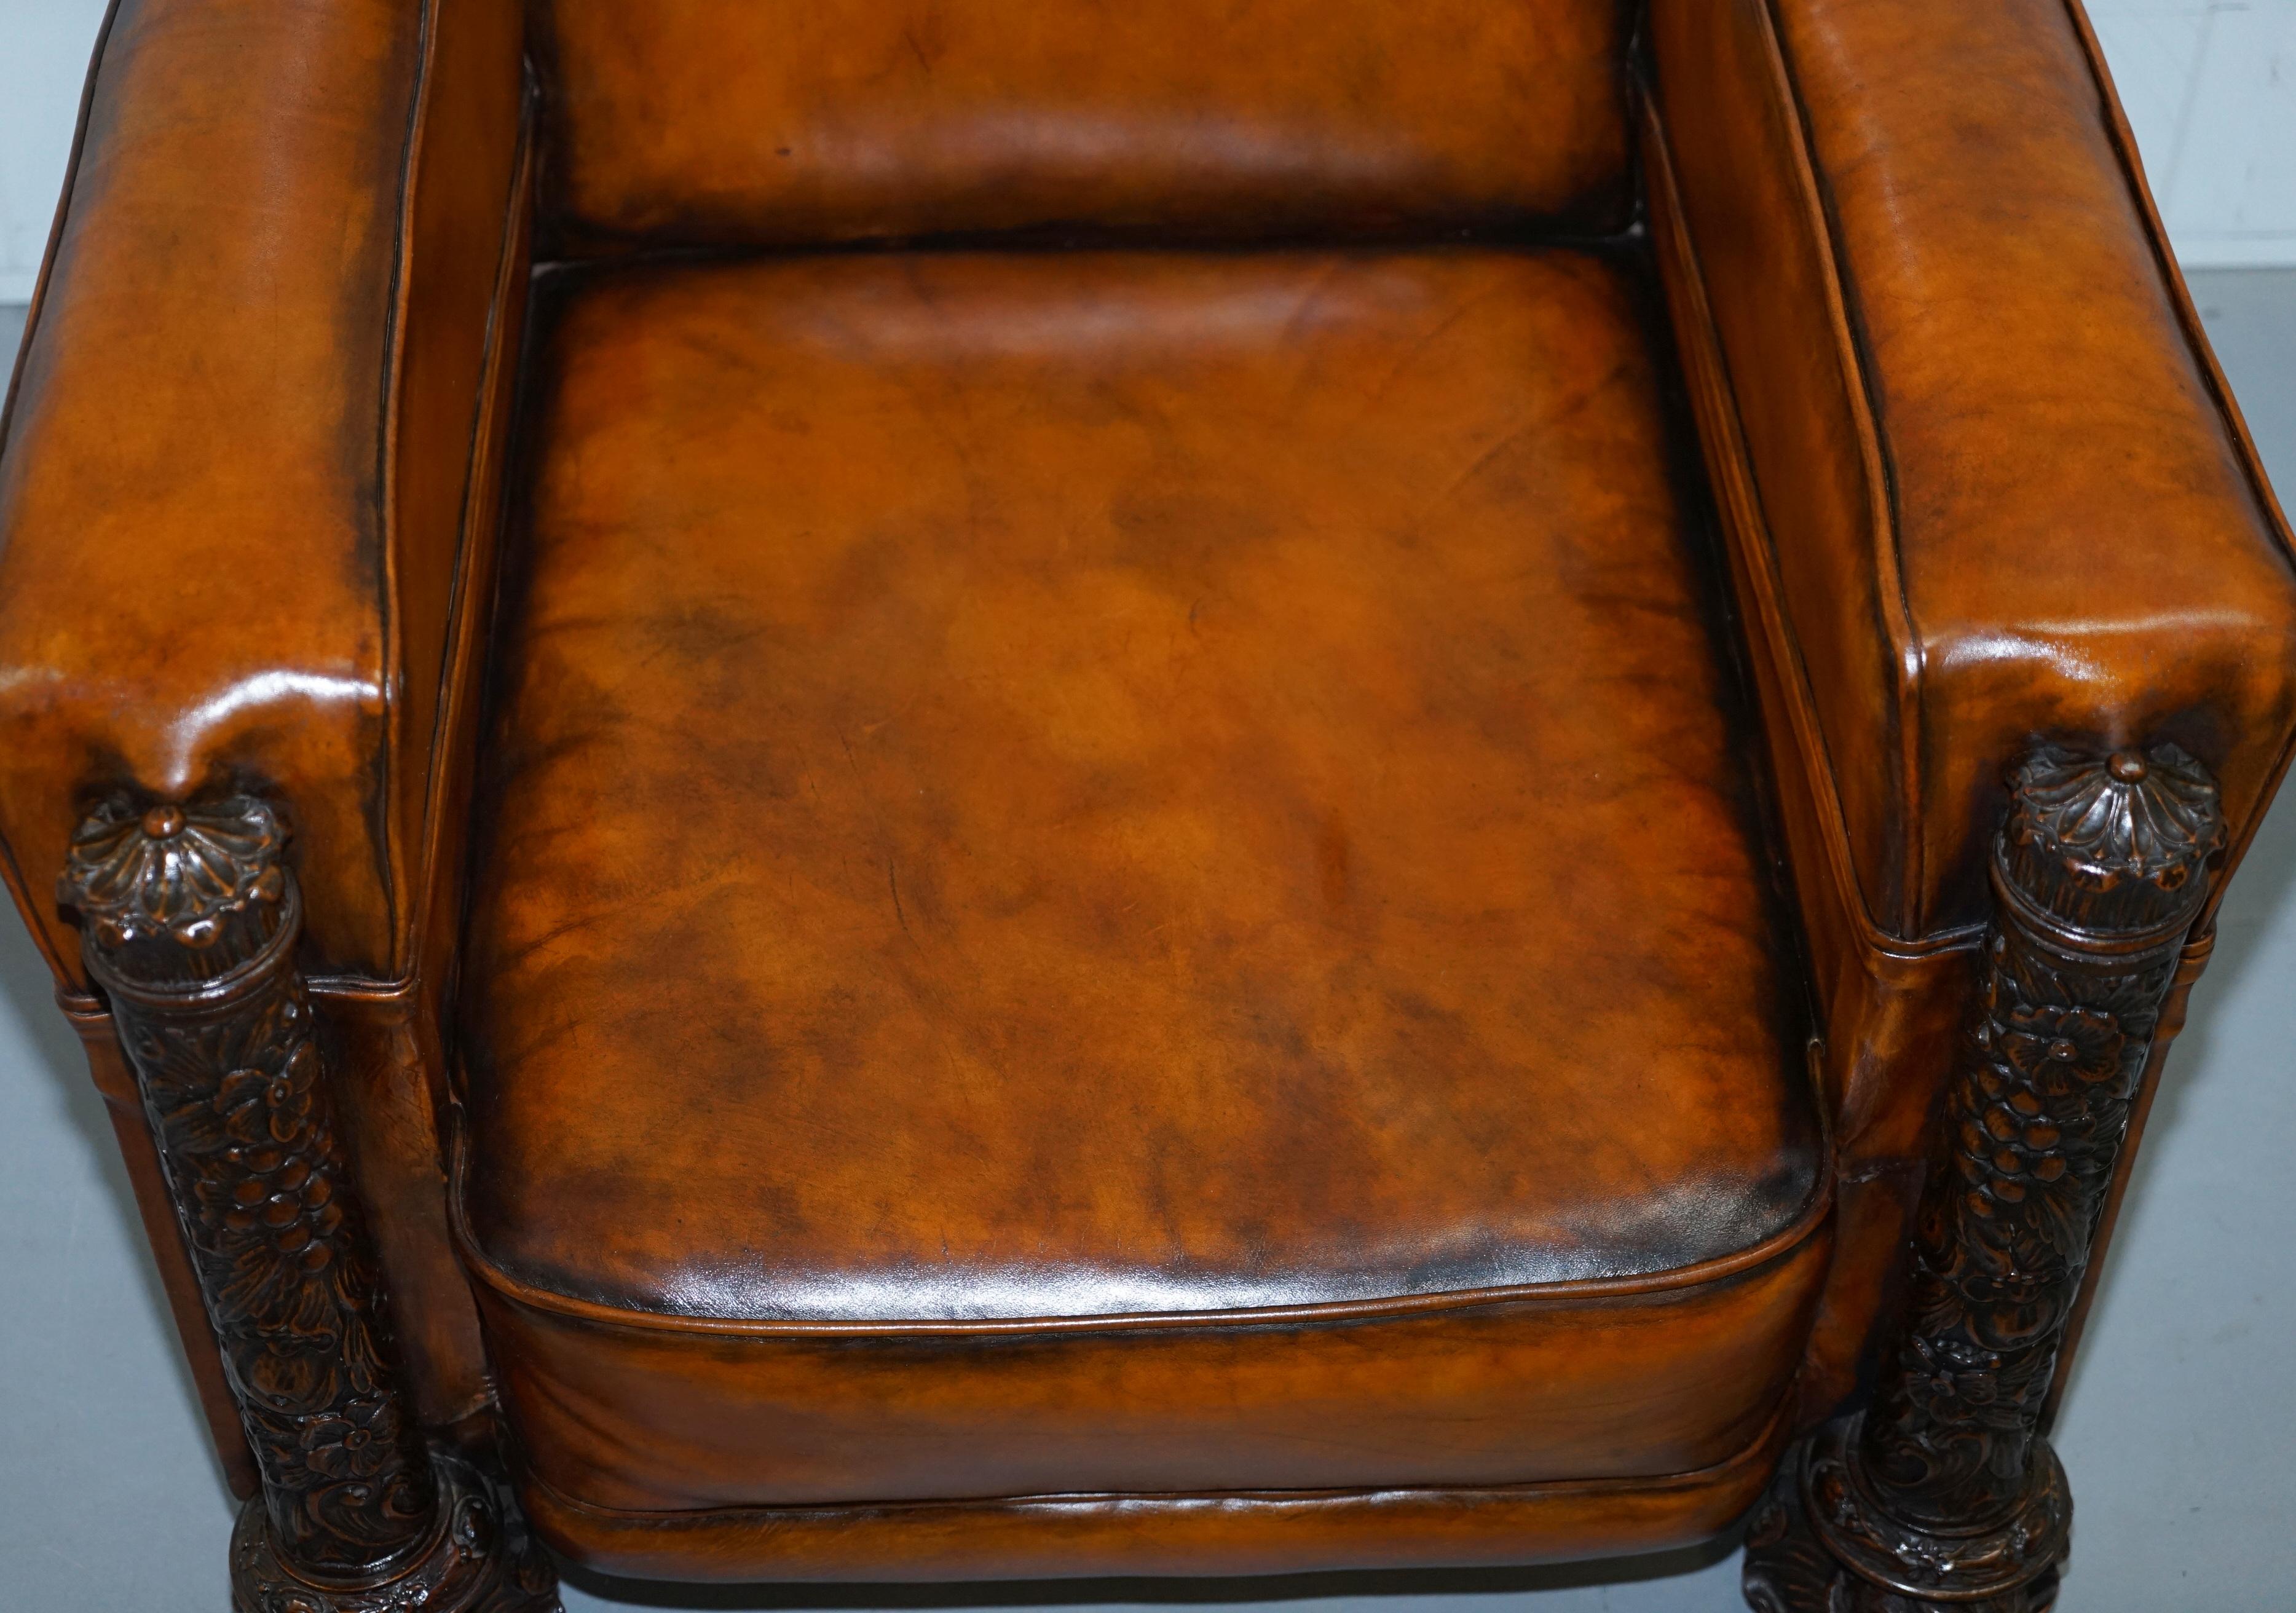 Pair of Victorian Brown Leather Club Armchairs 17th Century Cherub Putti Angels 1